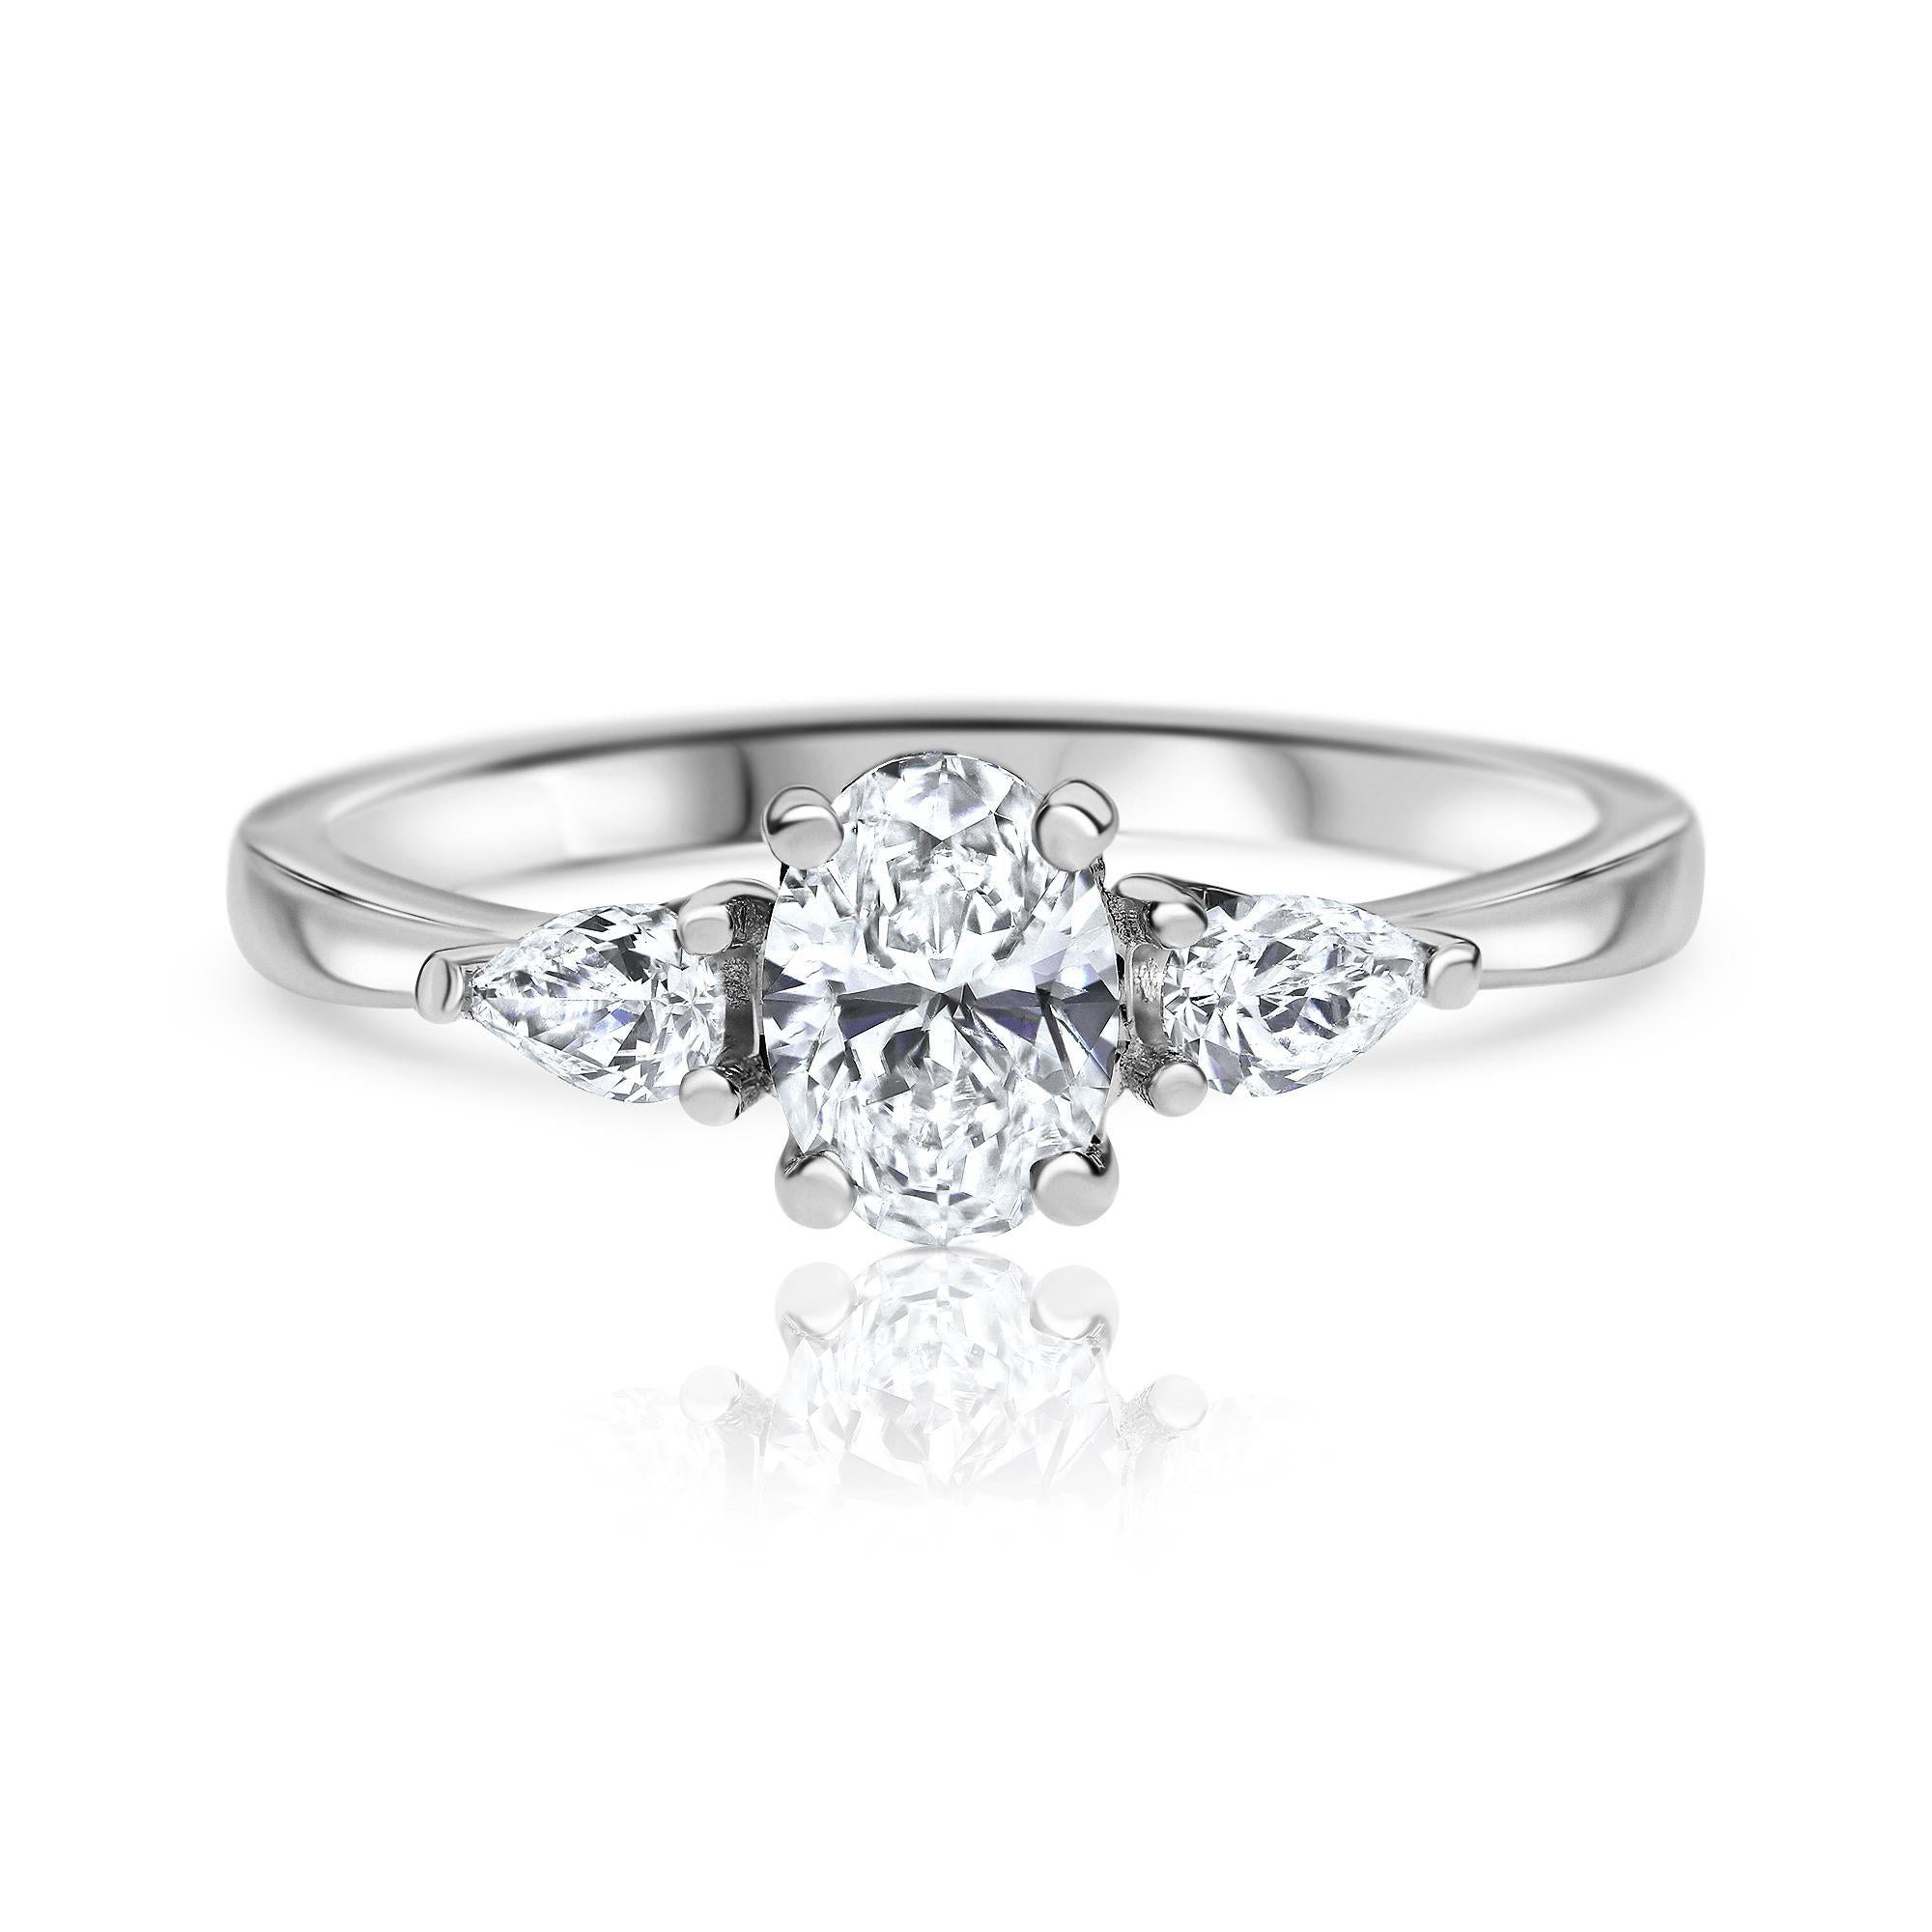 For Sale:  0.94 Carat Oval Diamond Ring in 14k White Gold GIA Certified, Shlomit Rogel 2